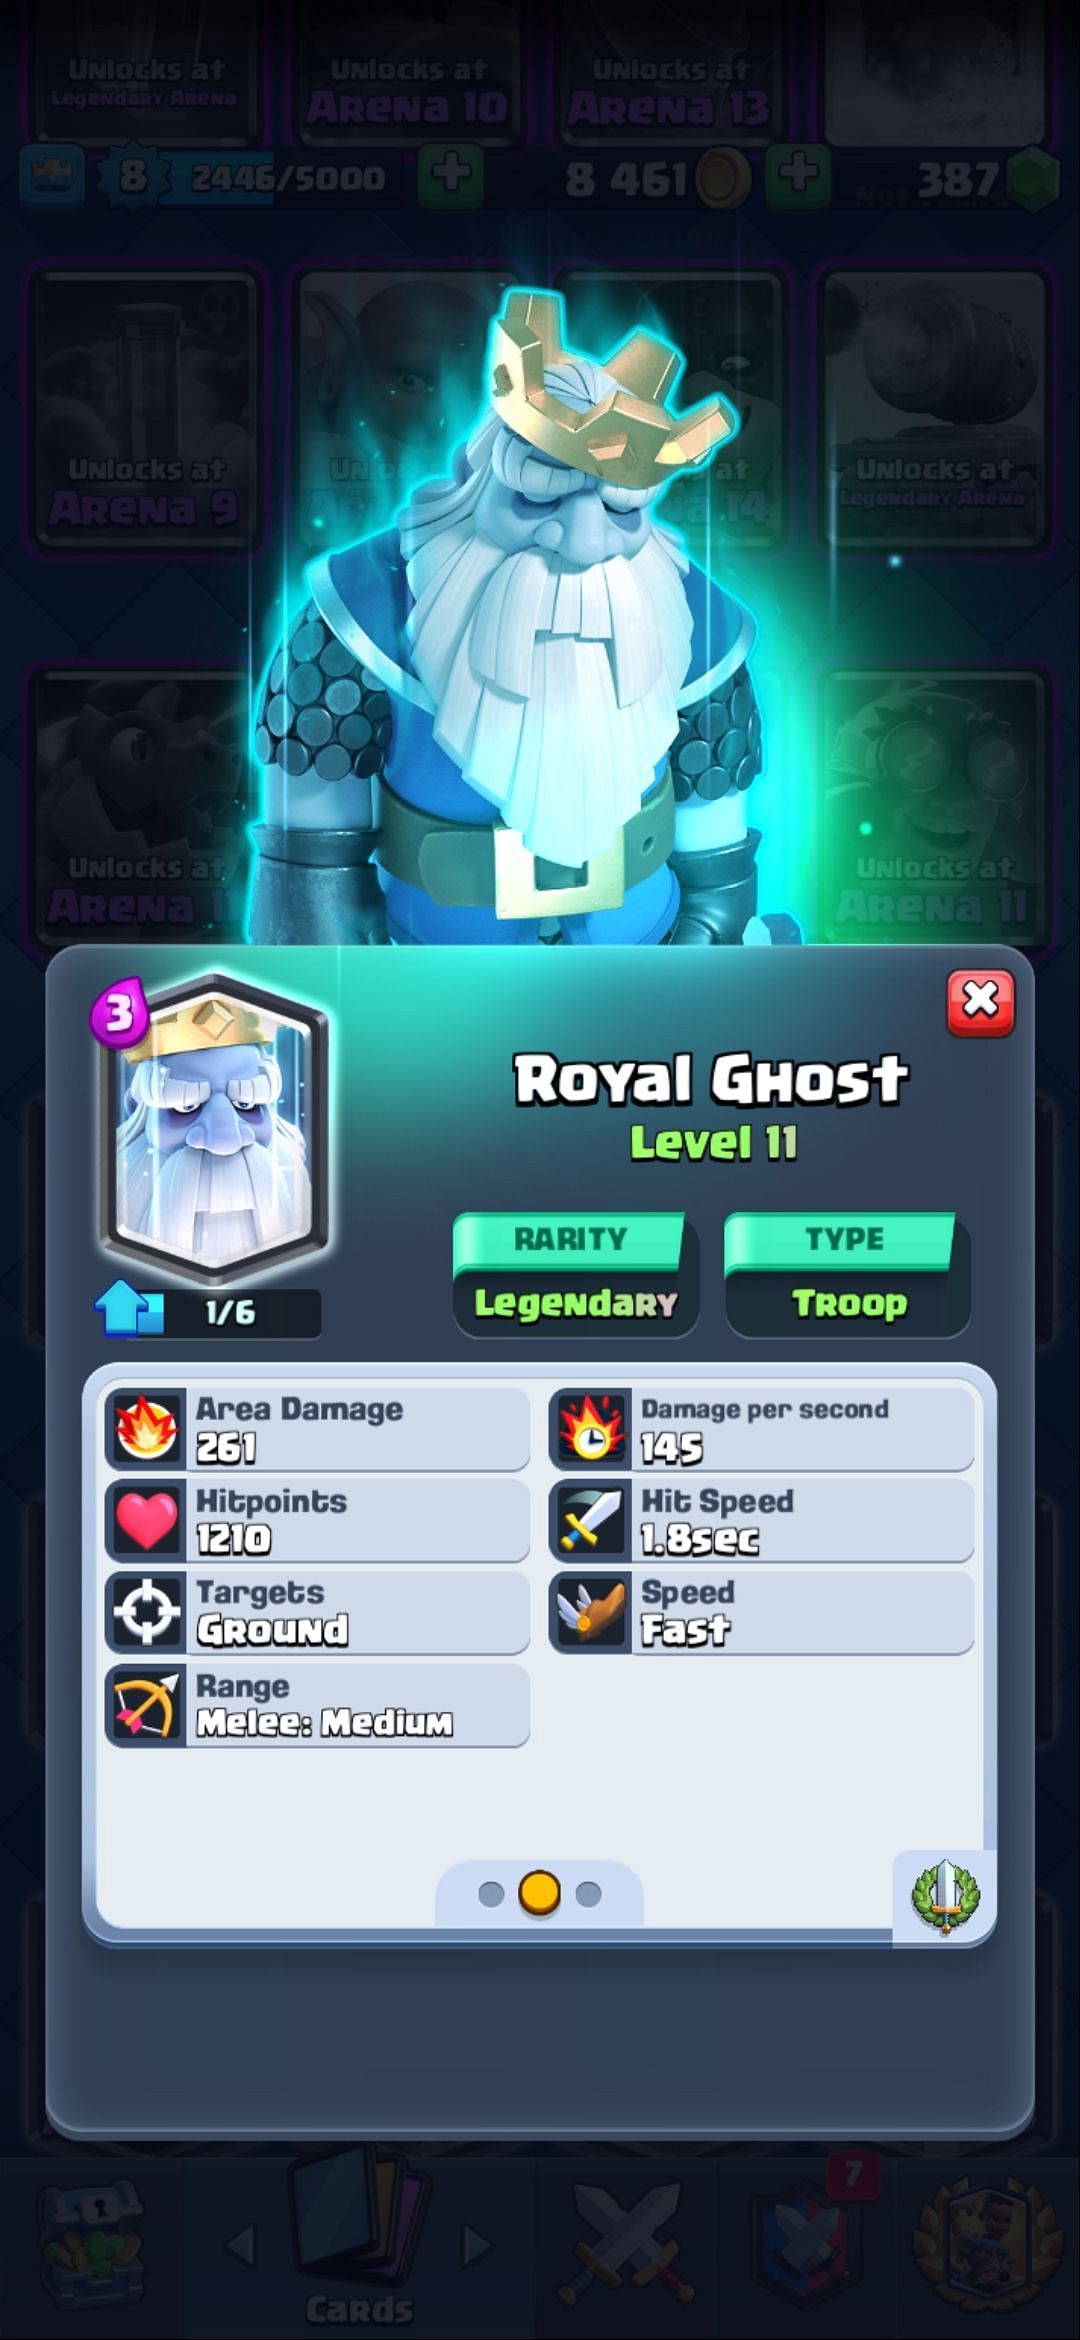 The Royal Ghost (Image via Sportskeeda)